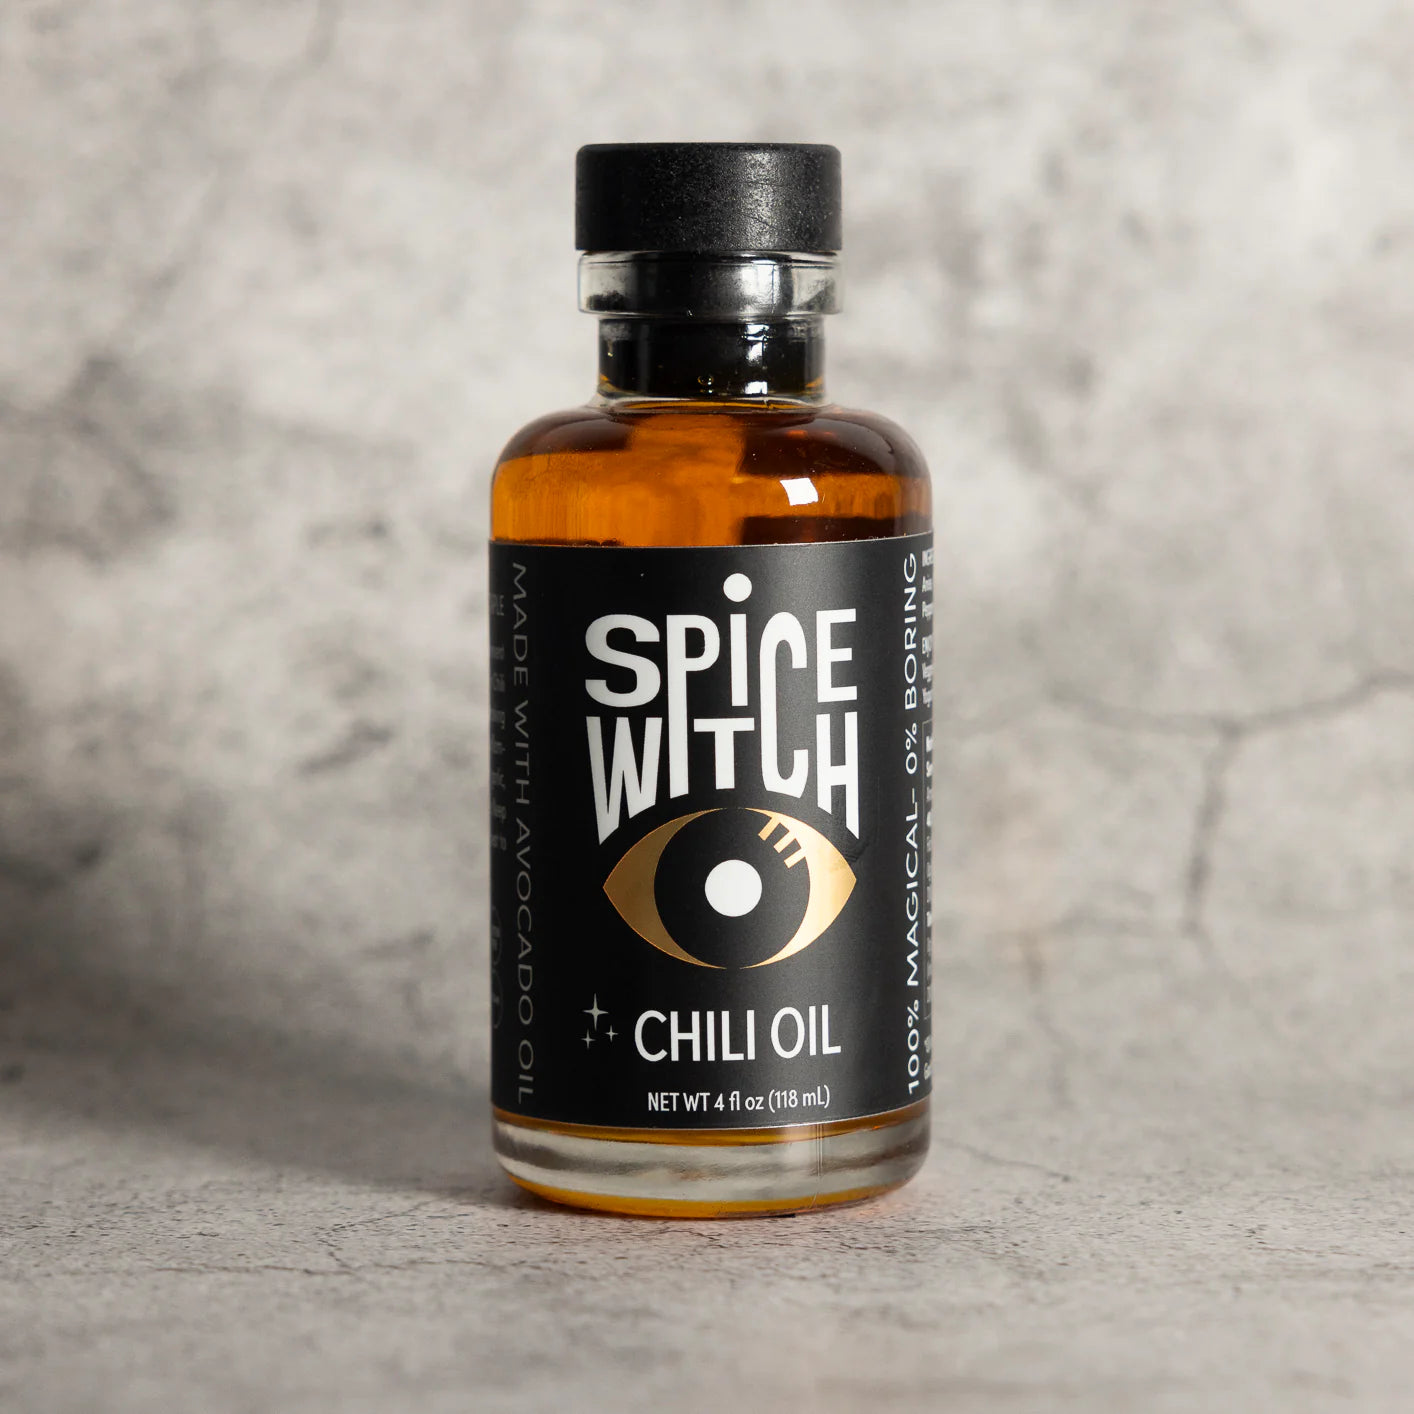 Spice Witch Chili Oil